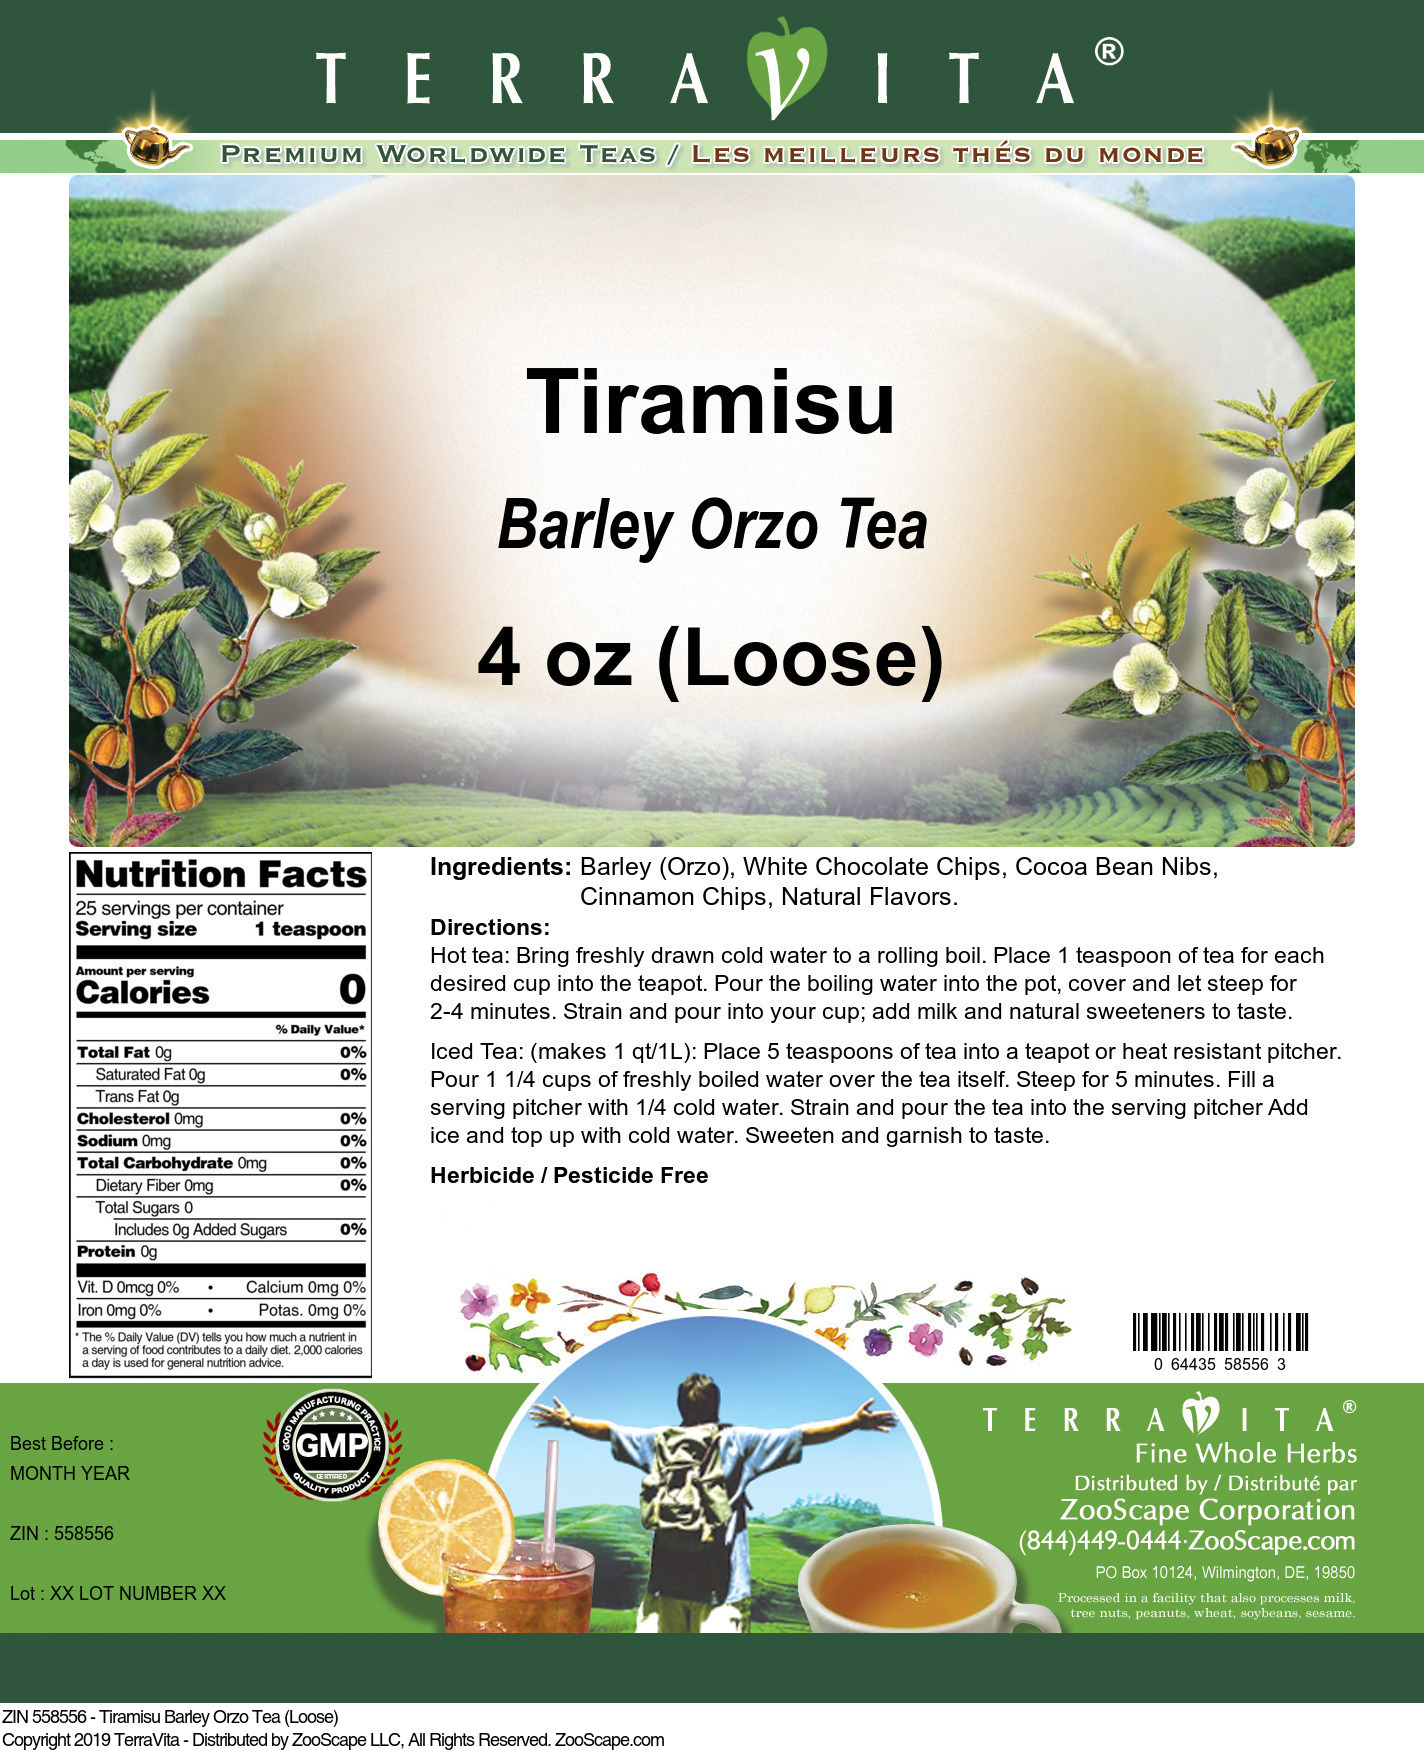 Tiramisu Barley Orzo Tea (Loose) - Label